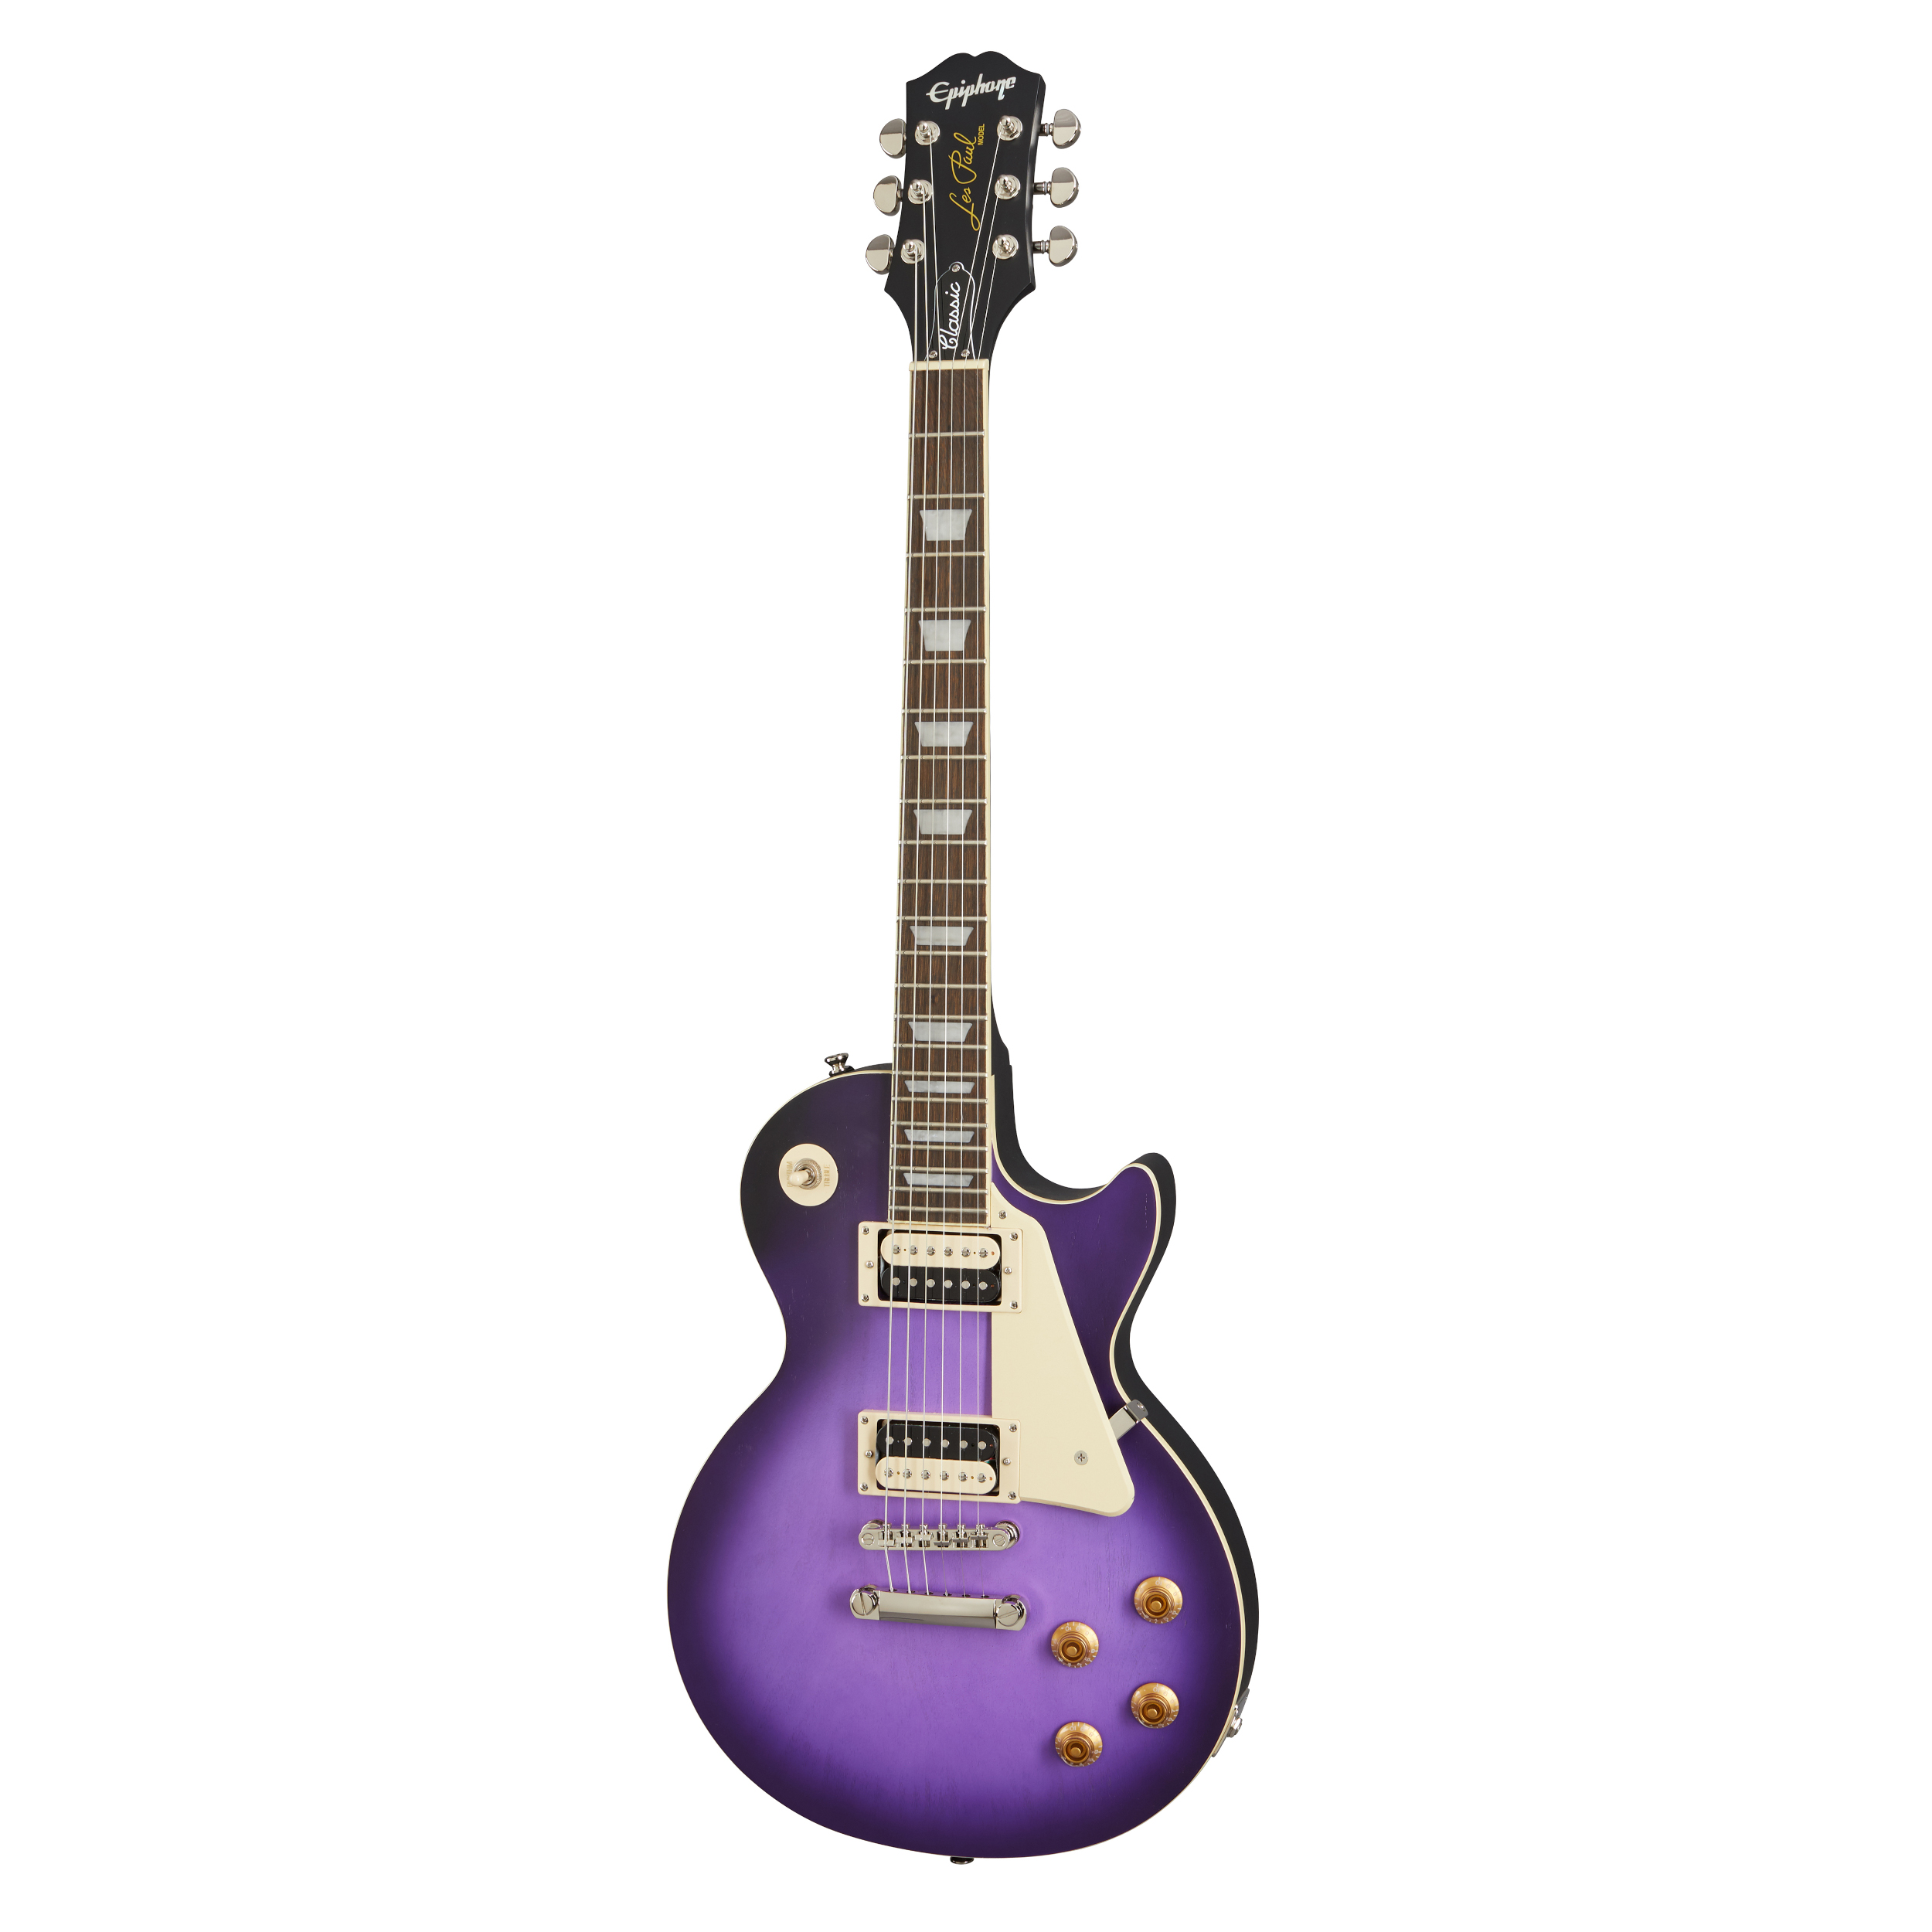 Epiphone Les Paul Classic Worn - Worn Purple Guitar